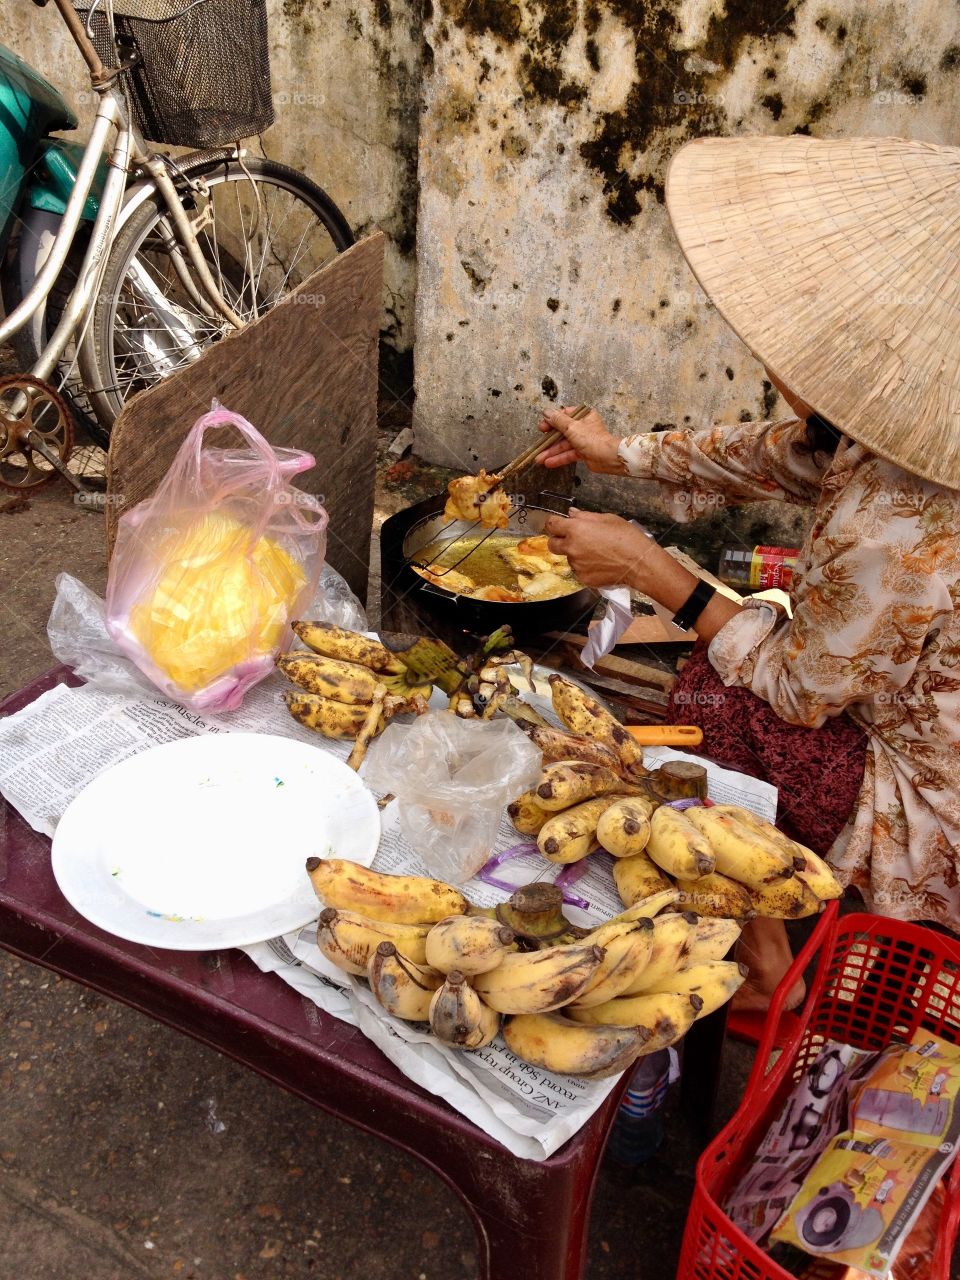 Vietnamese woman fries bananas to sell